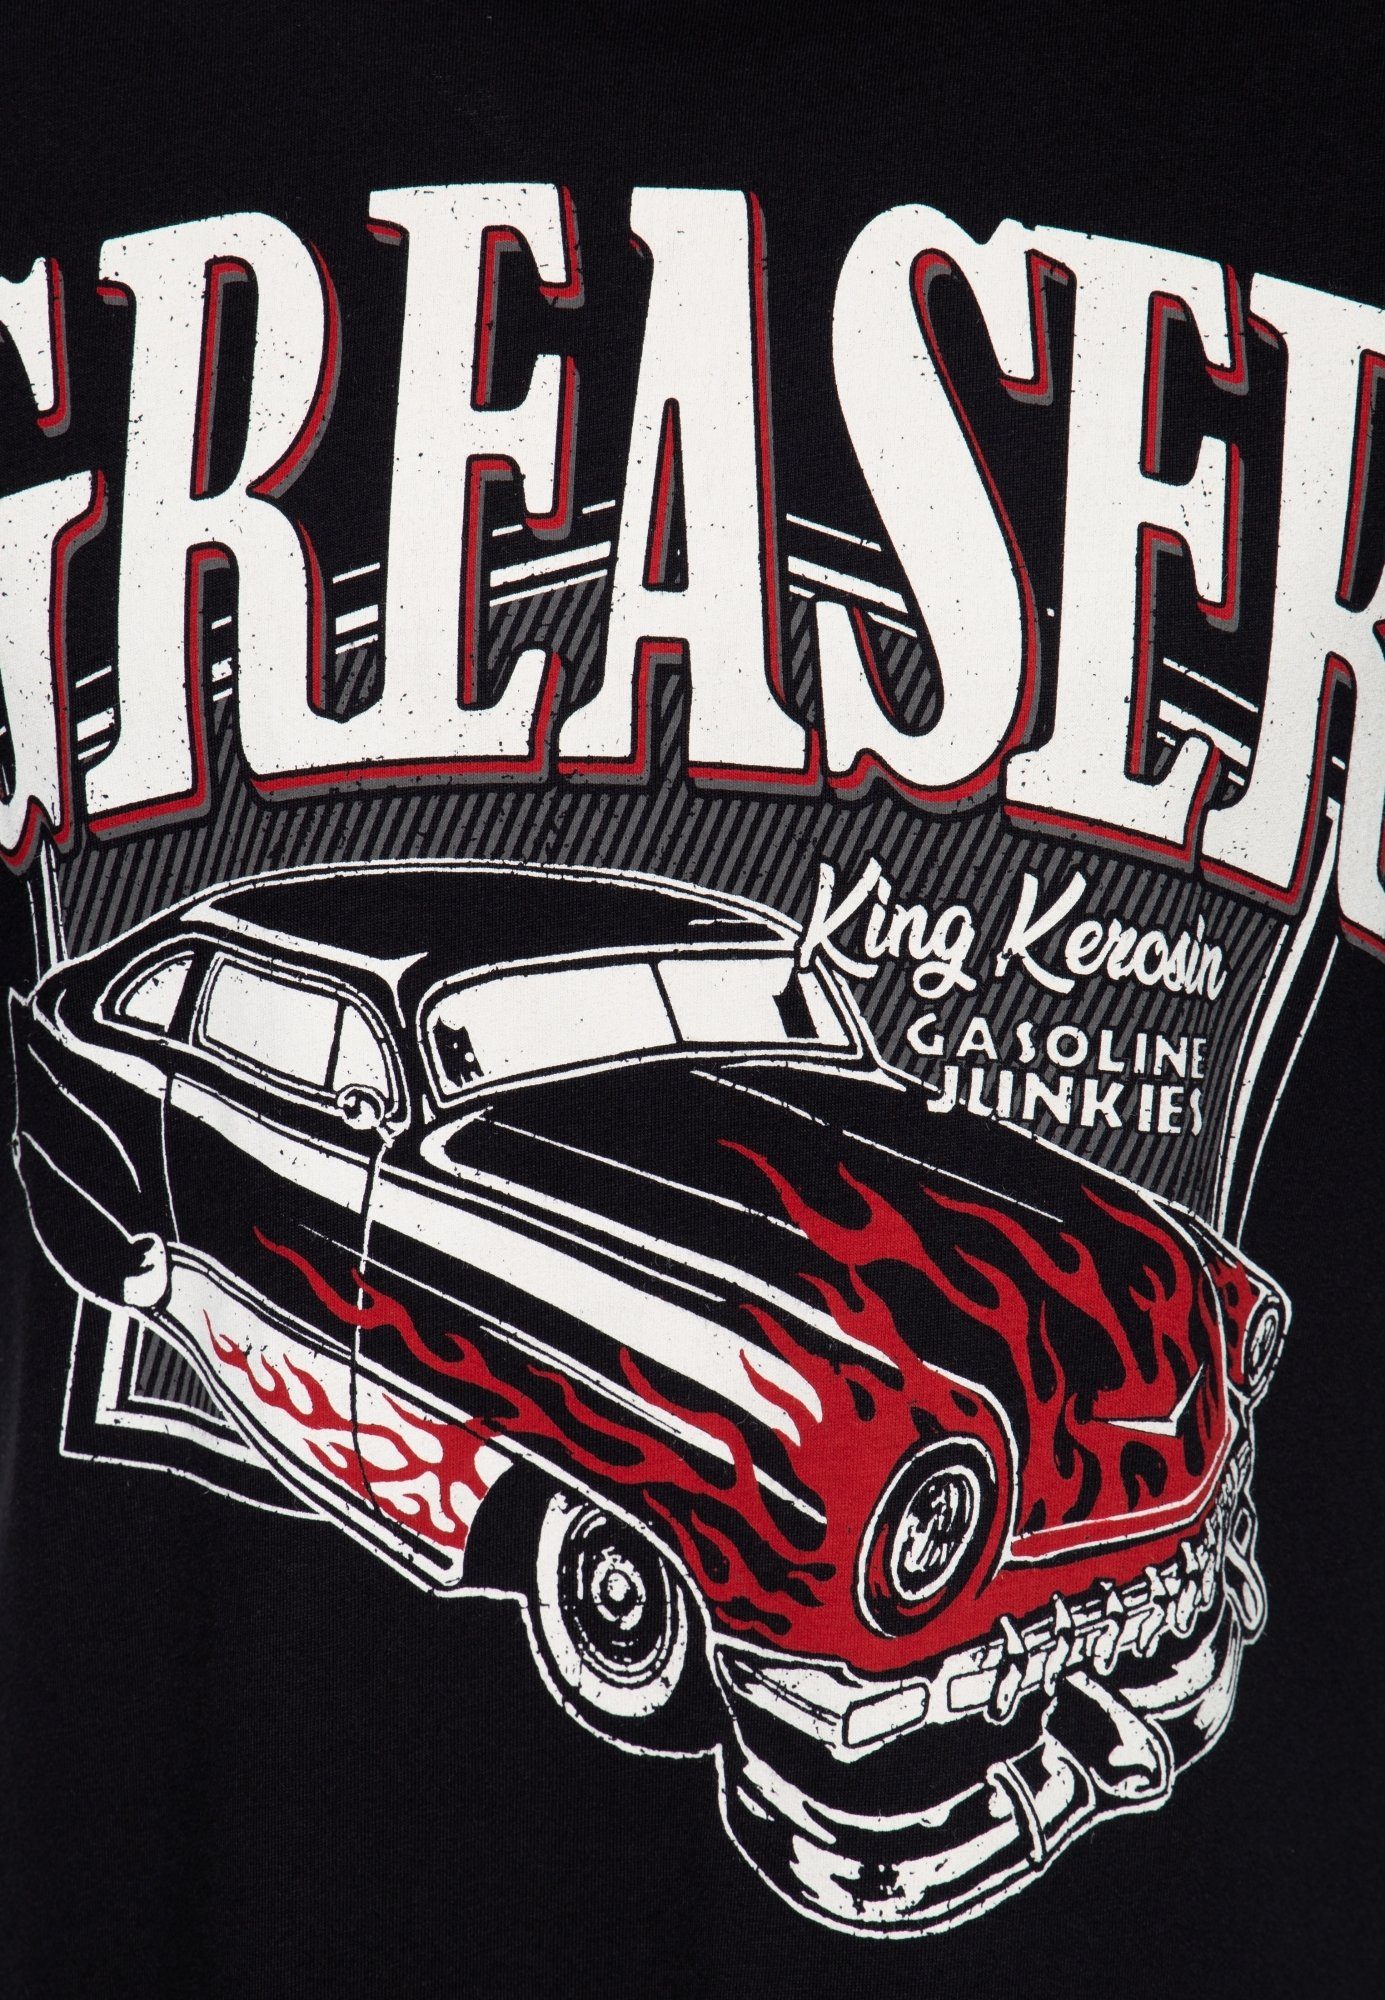 Vintage-Print schwarz mit coolem junkies KingKerosin Gasoline T-Shirt